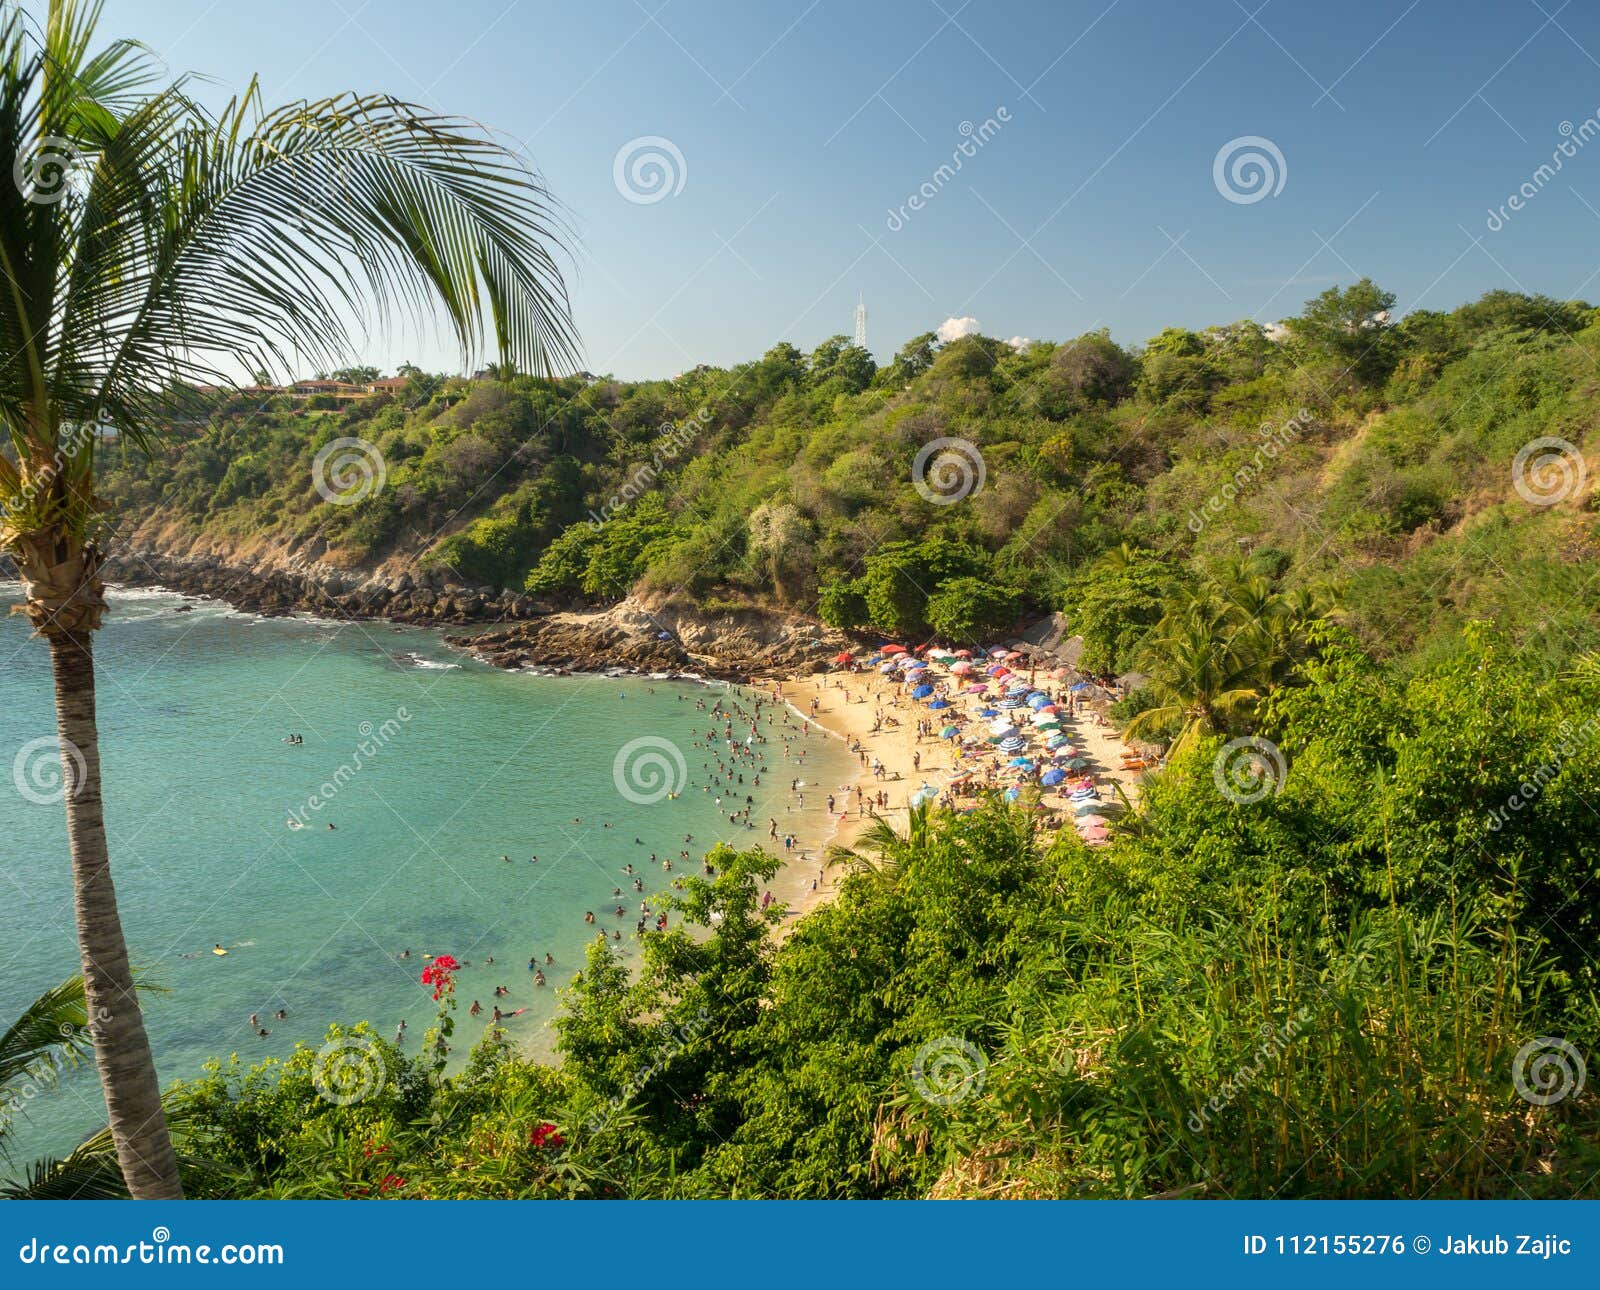 puerto escondido, oaxaca, mexico, south america: [playa carrizalillo, crowdwed natural beach, tourist destination]